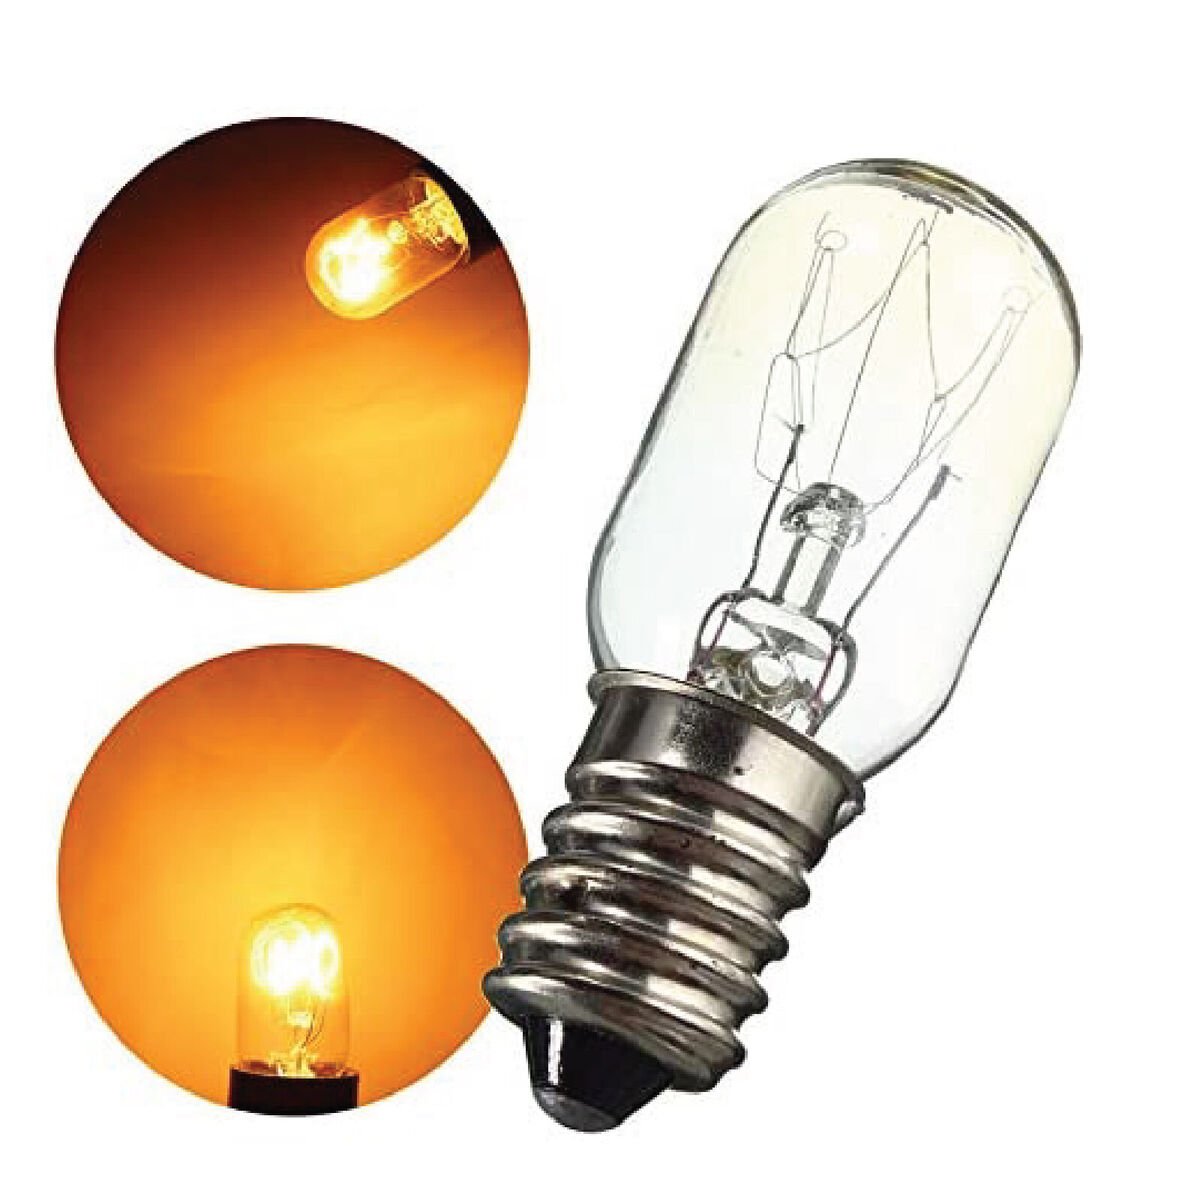 Aktuator Maladroit Ledig 3 x Himalayan Salt Lamp Screw Bulb Oven Fridge Bulb E14 Warm White 90 Lumen  15W | eBay